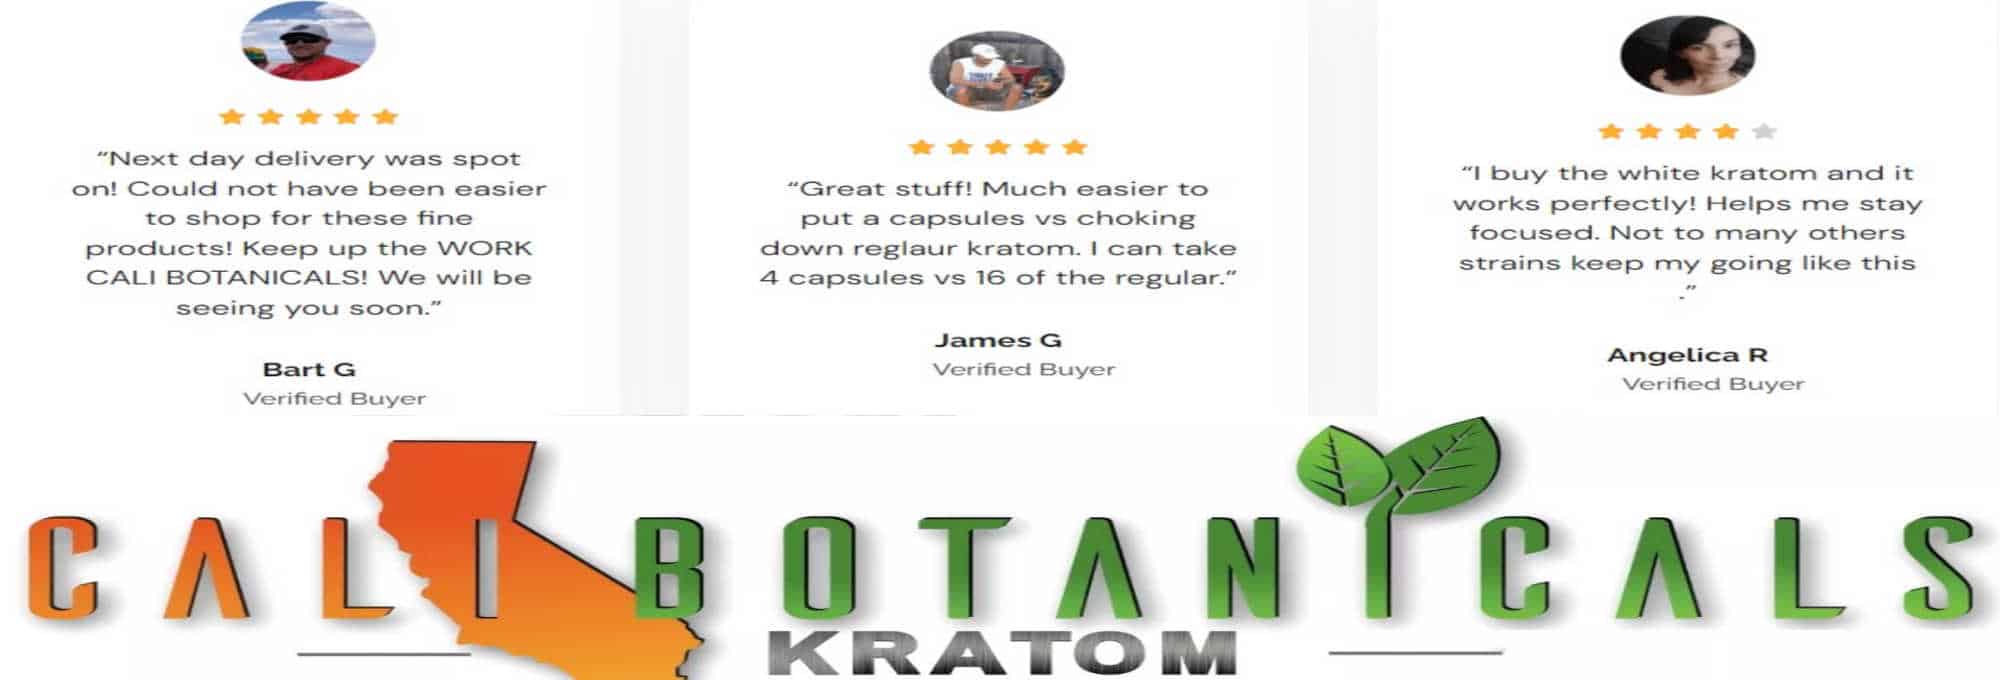 image of cali botanicals kratom product reviews